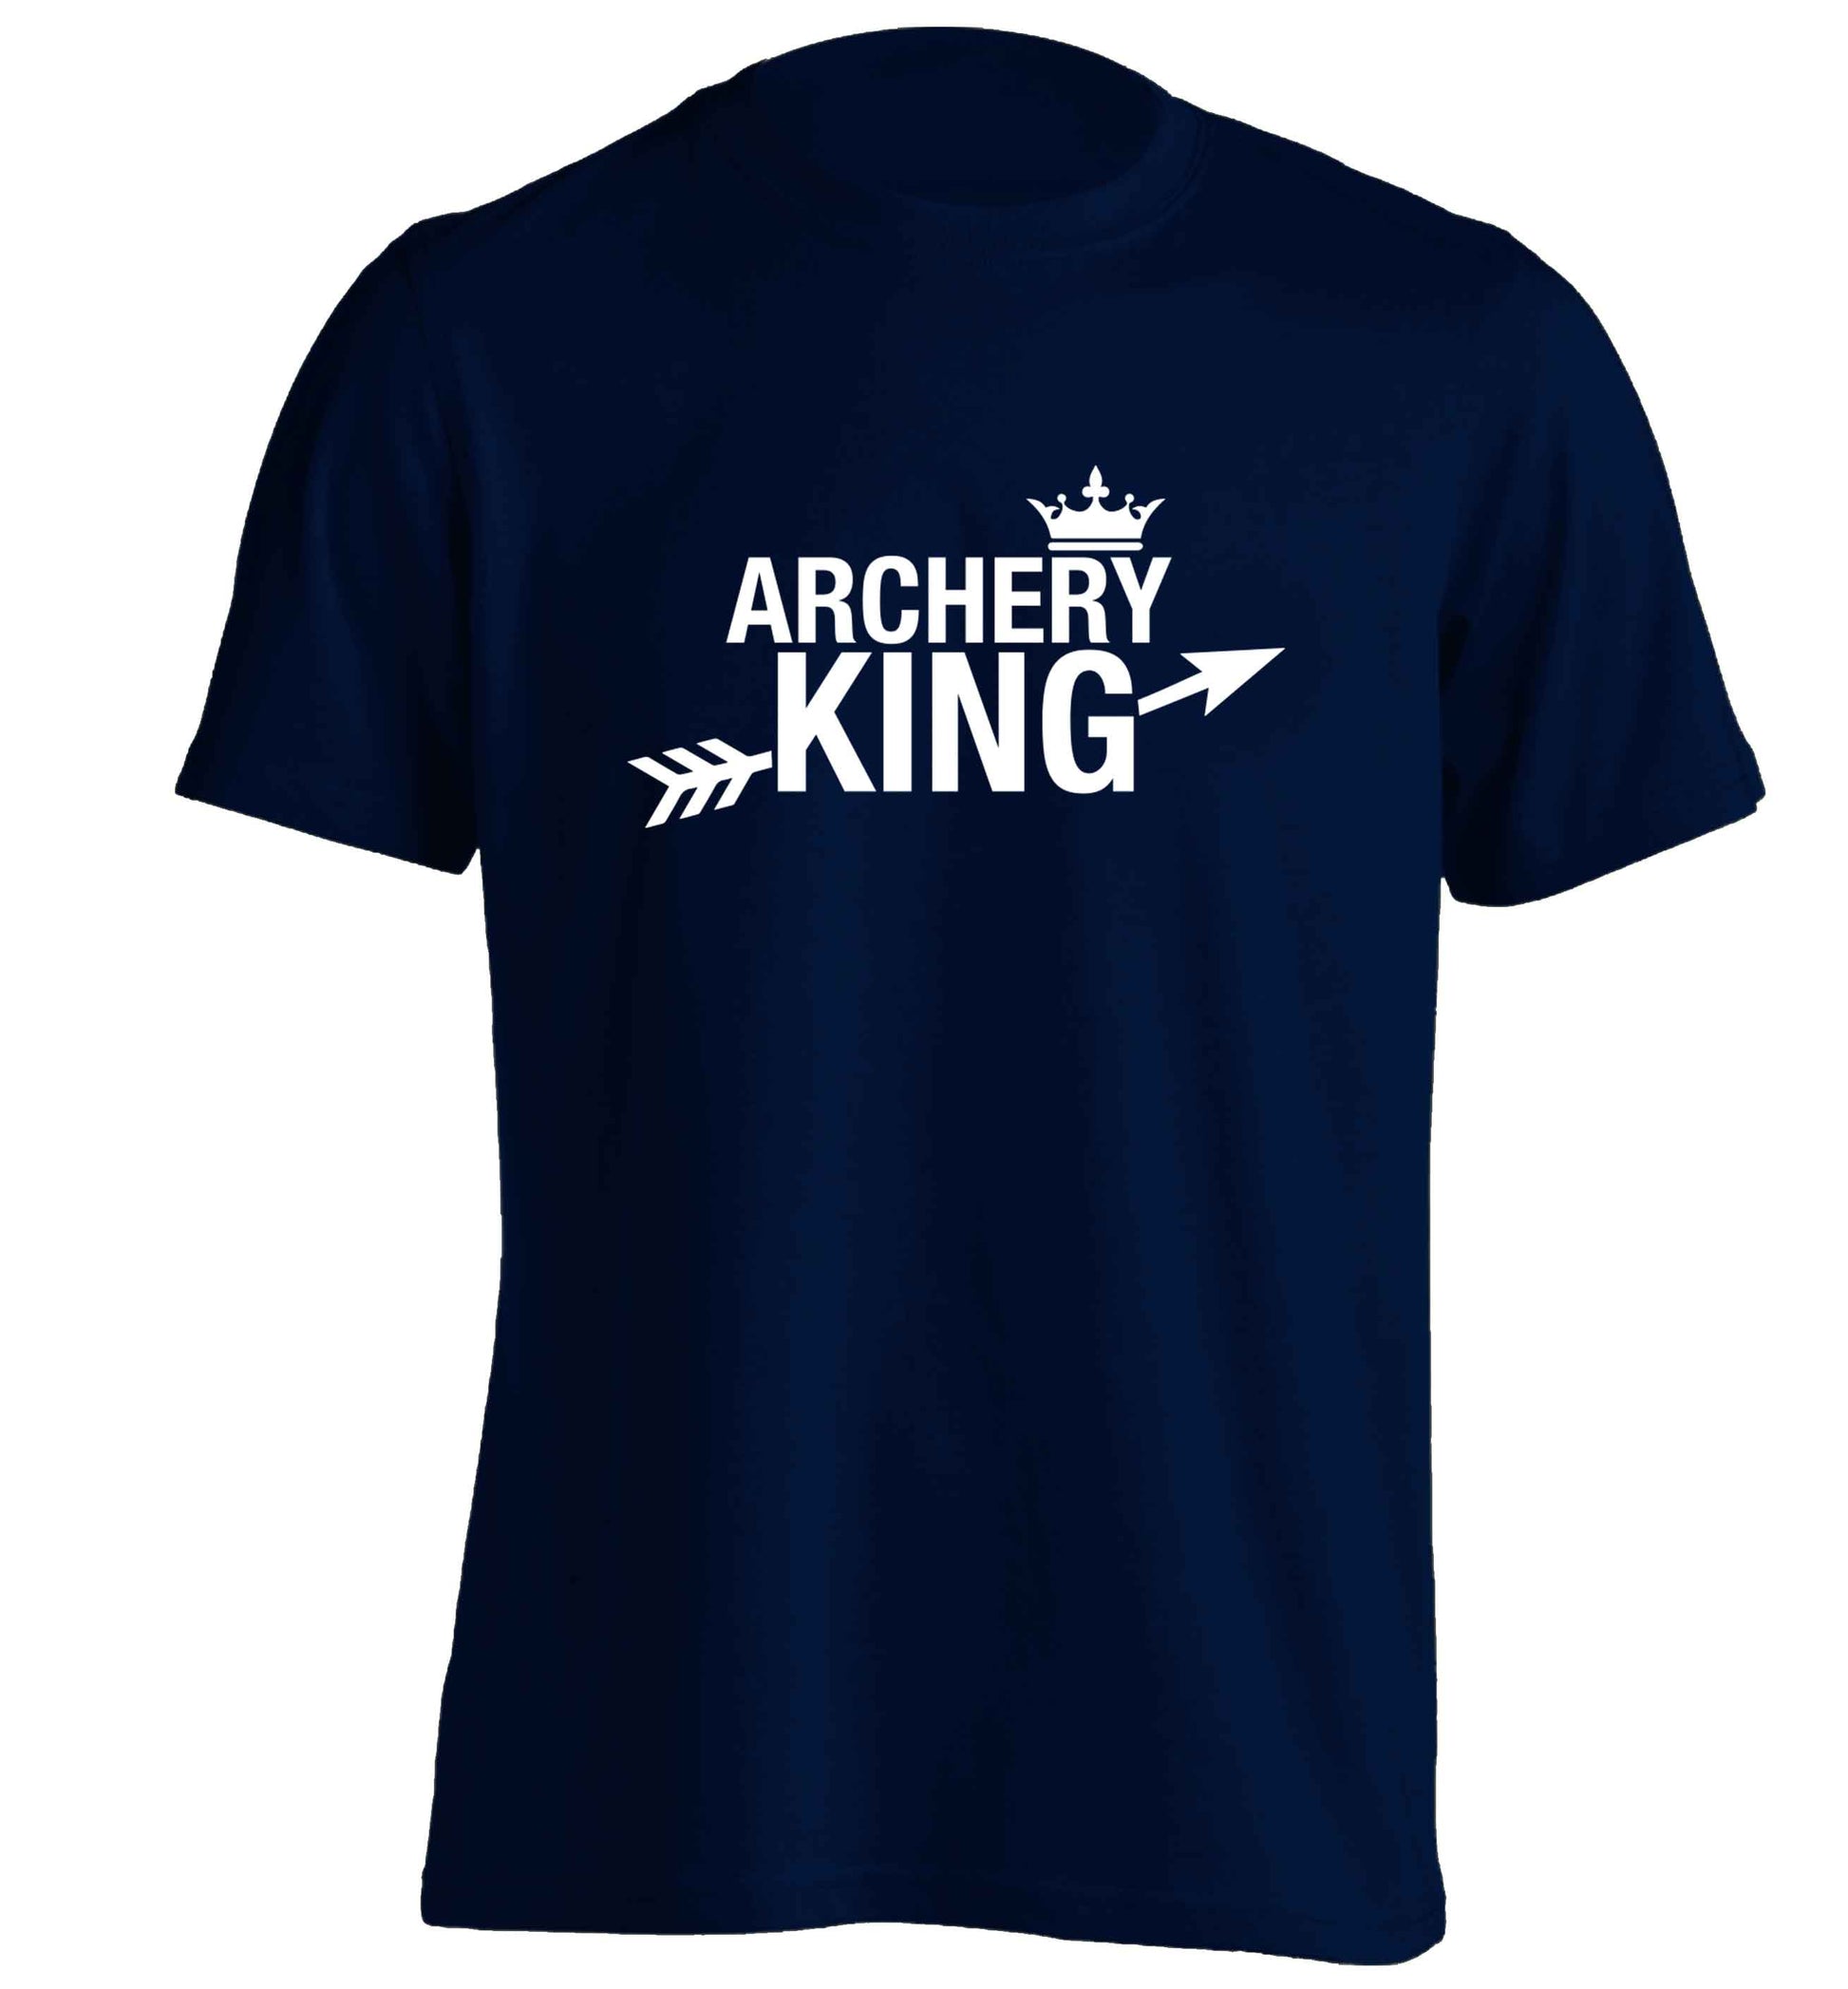 Archery king adults unisex navy Tshirt 2XL